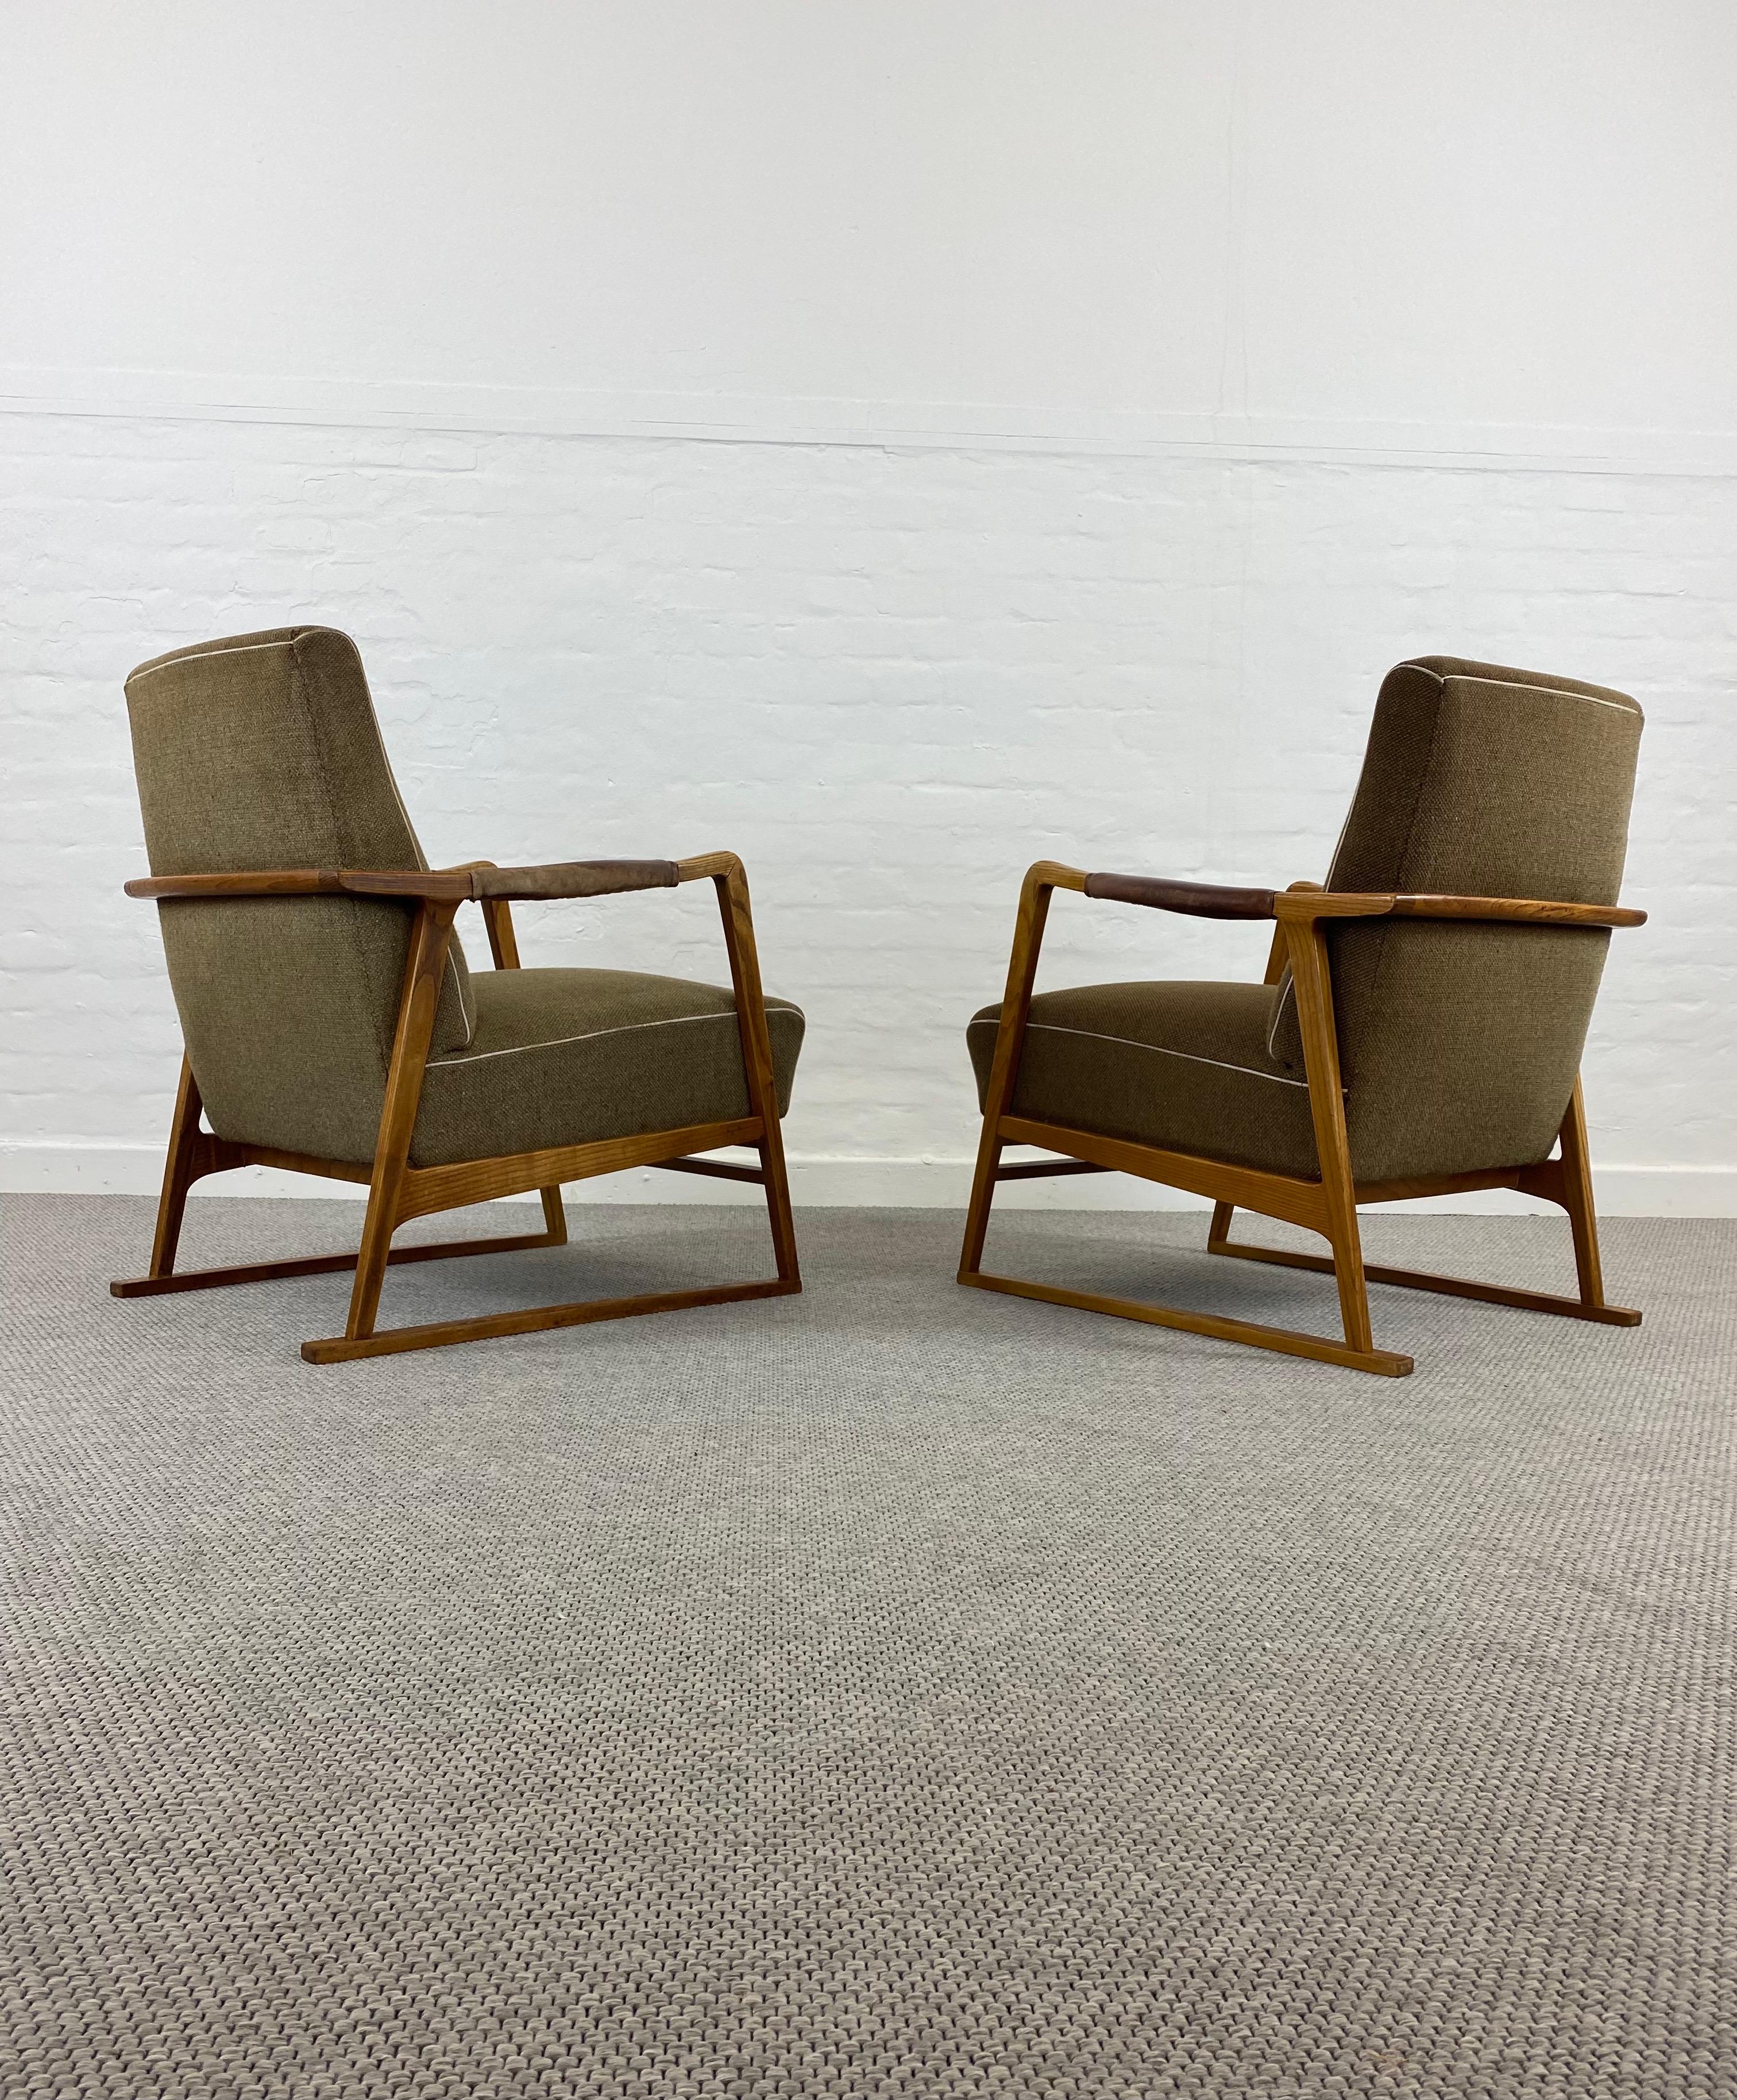 Pair of 1950s Midcentury WK Arm-Chairs with Runners for Deutsche Werkstätten For Sale 9